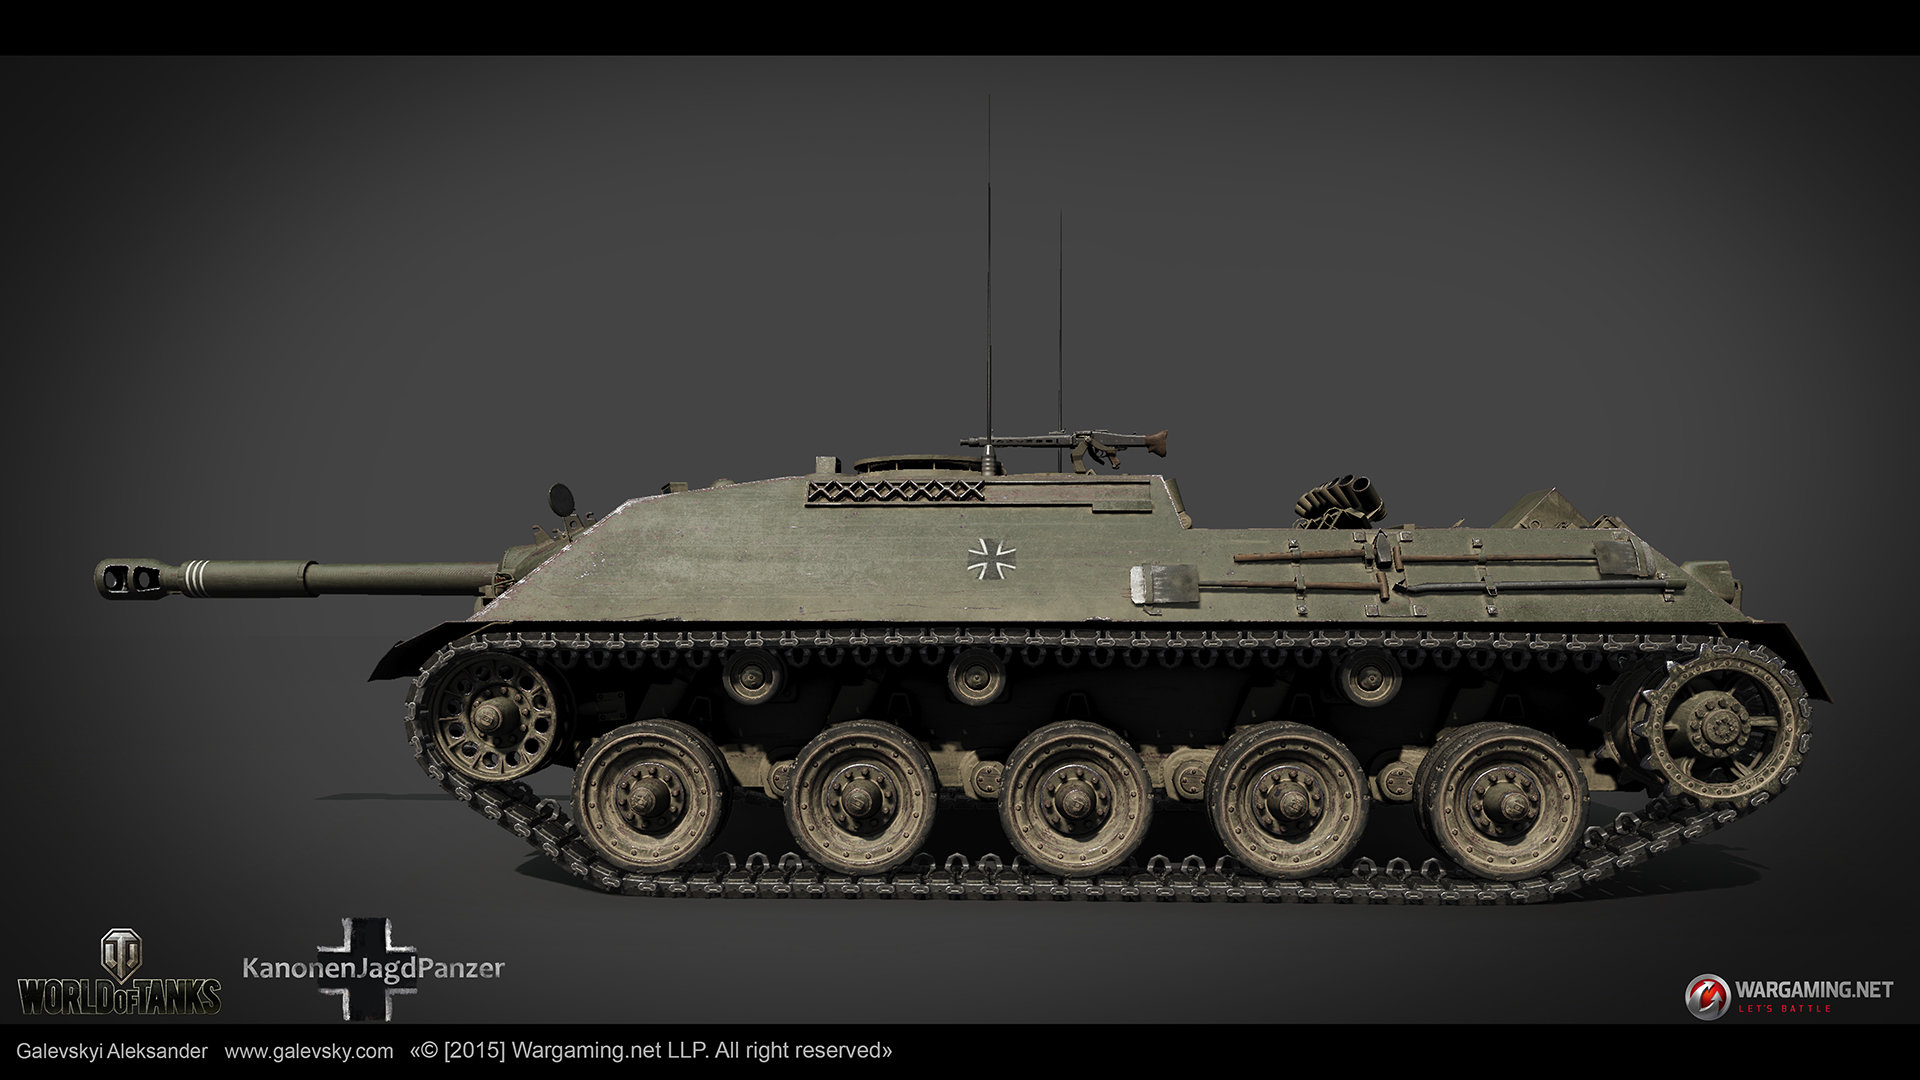 aleksander-galevskyi-kanonenjagdpanzer-fin-small-03